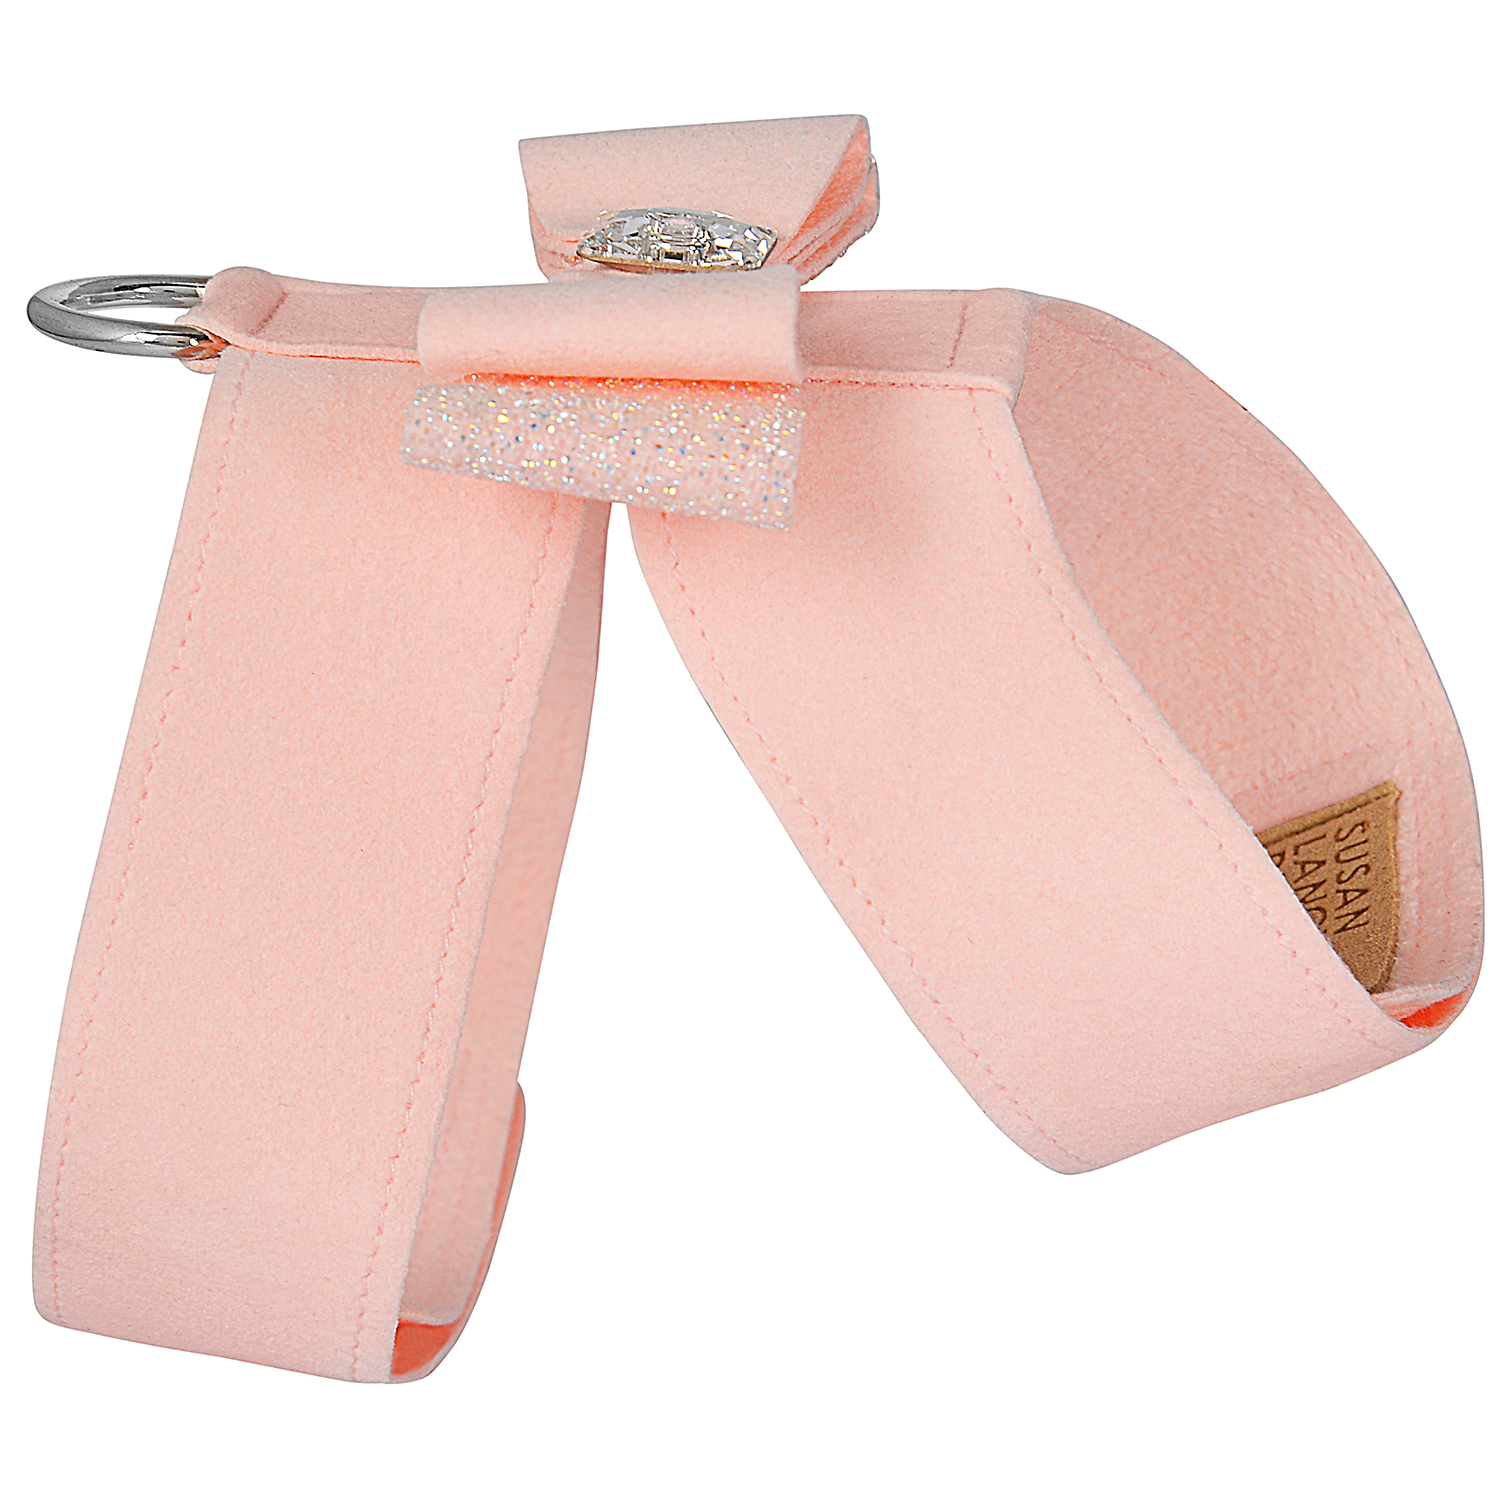 Pet Boutique - Dog Harness - Puppy Pink Crystal Stellar Big Bow Tinkie Dog Harness by Susan Lanci